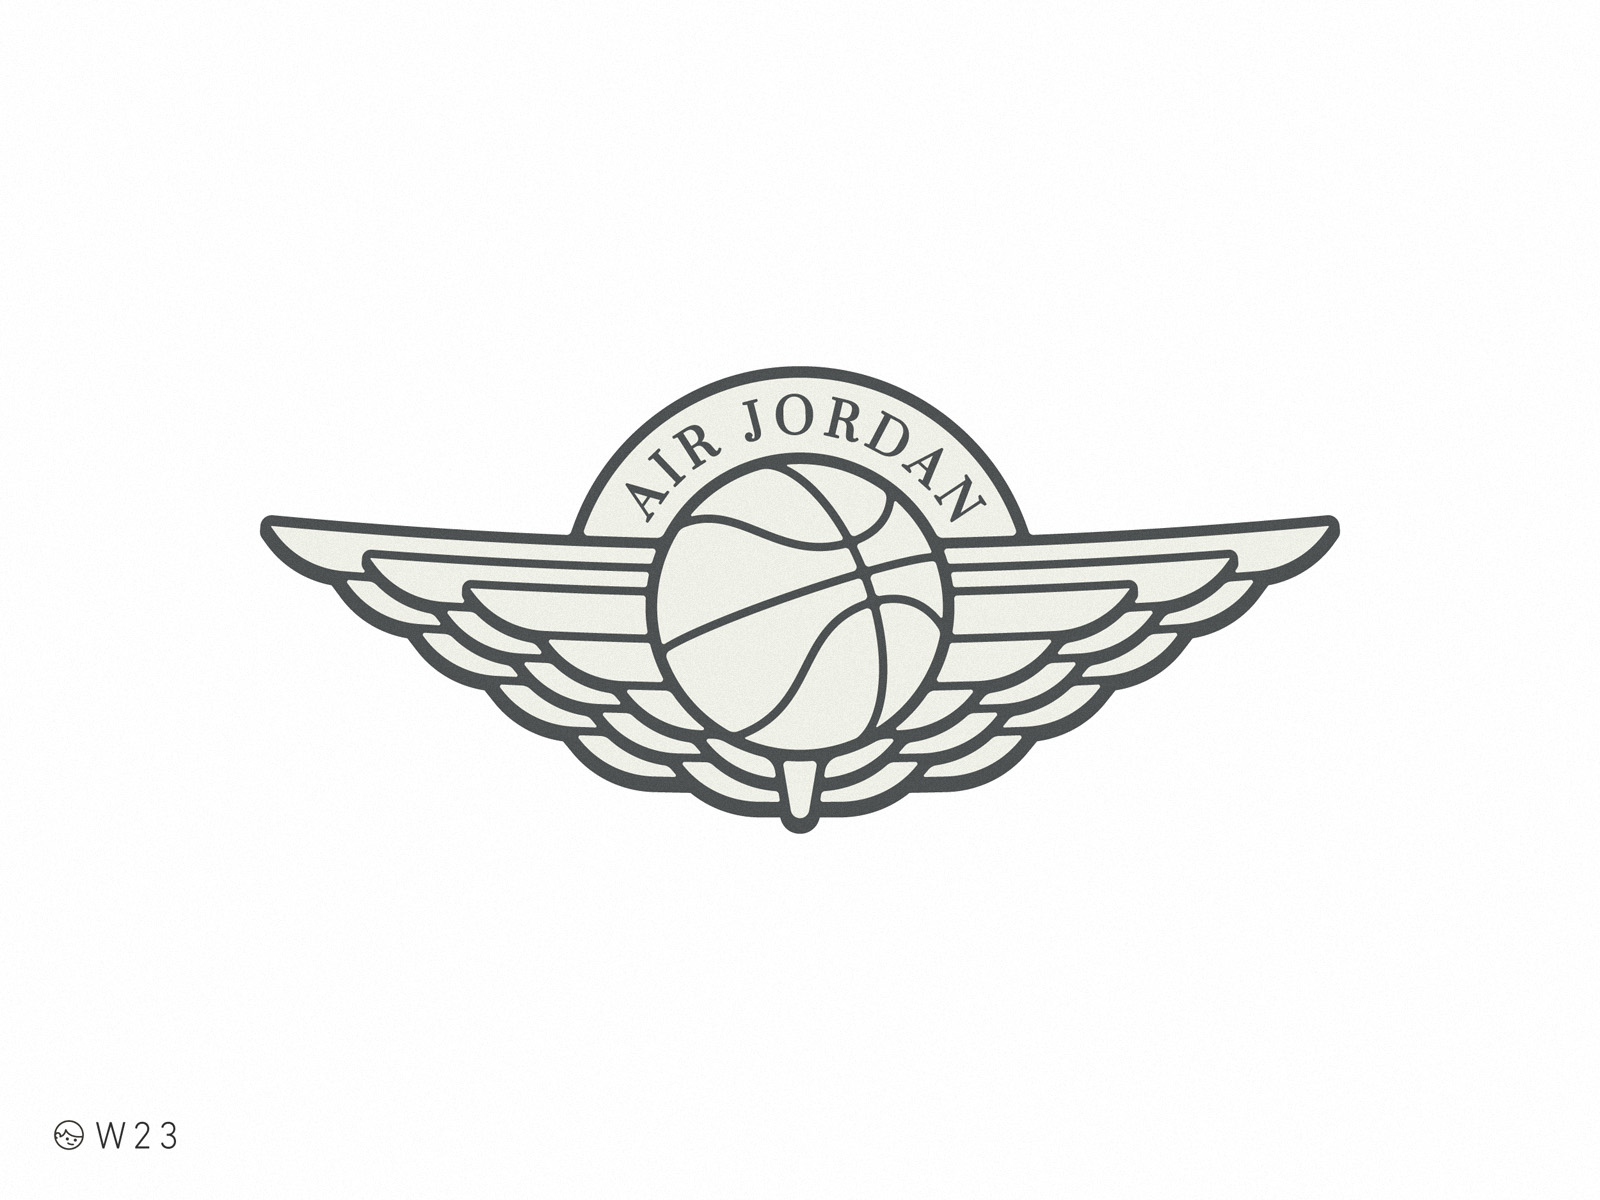 drawing of jordan logo